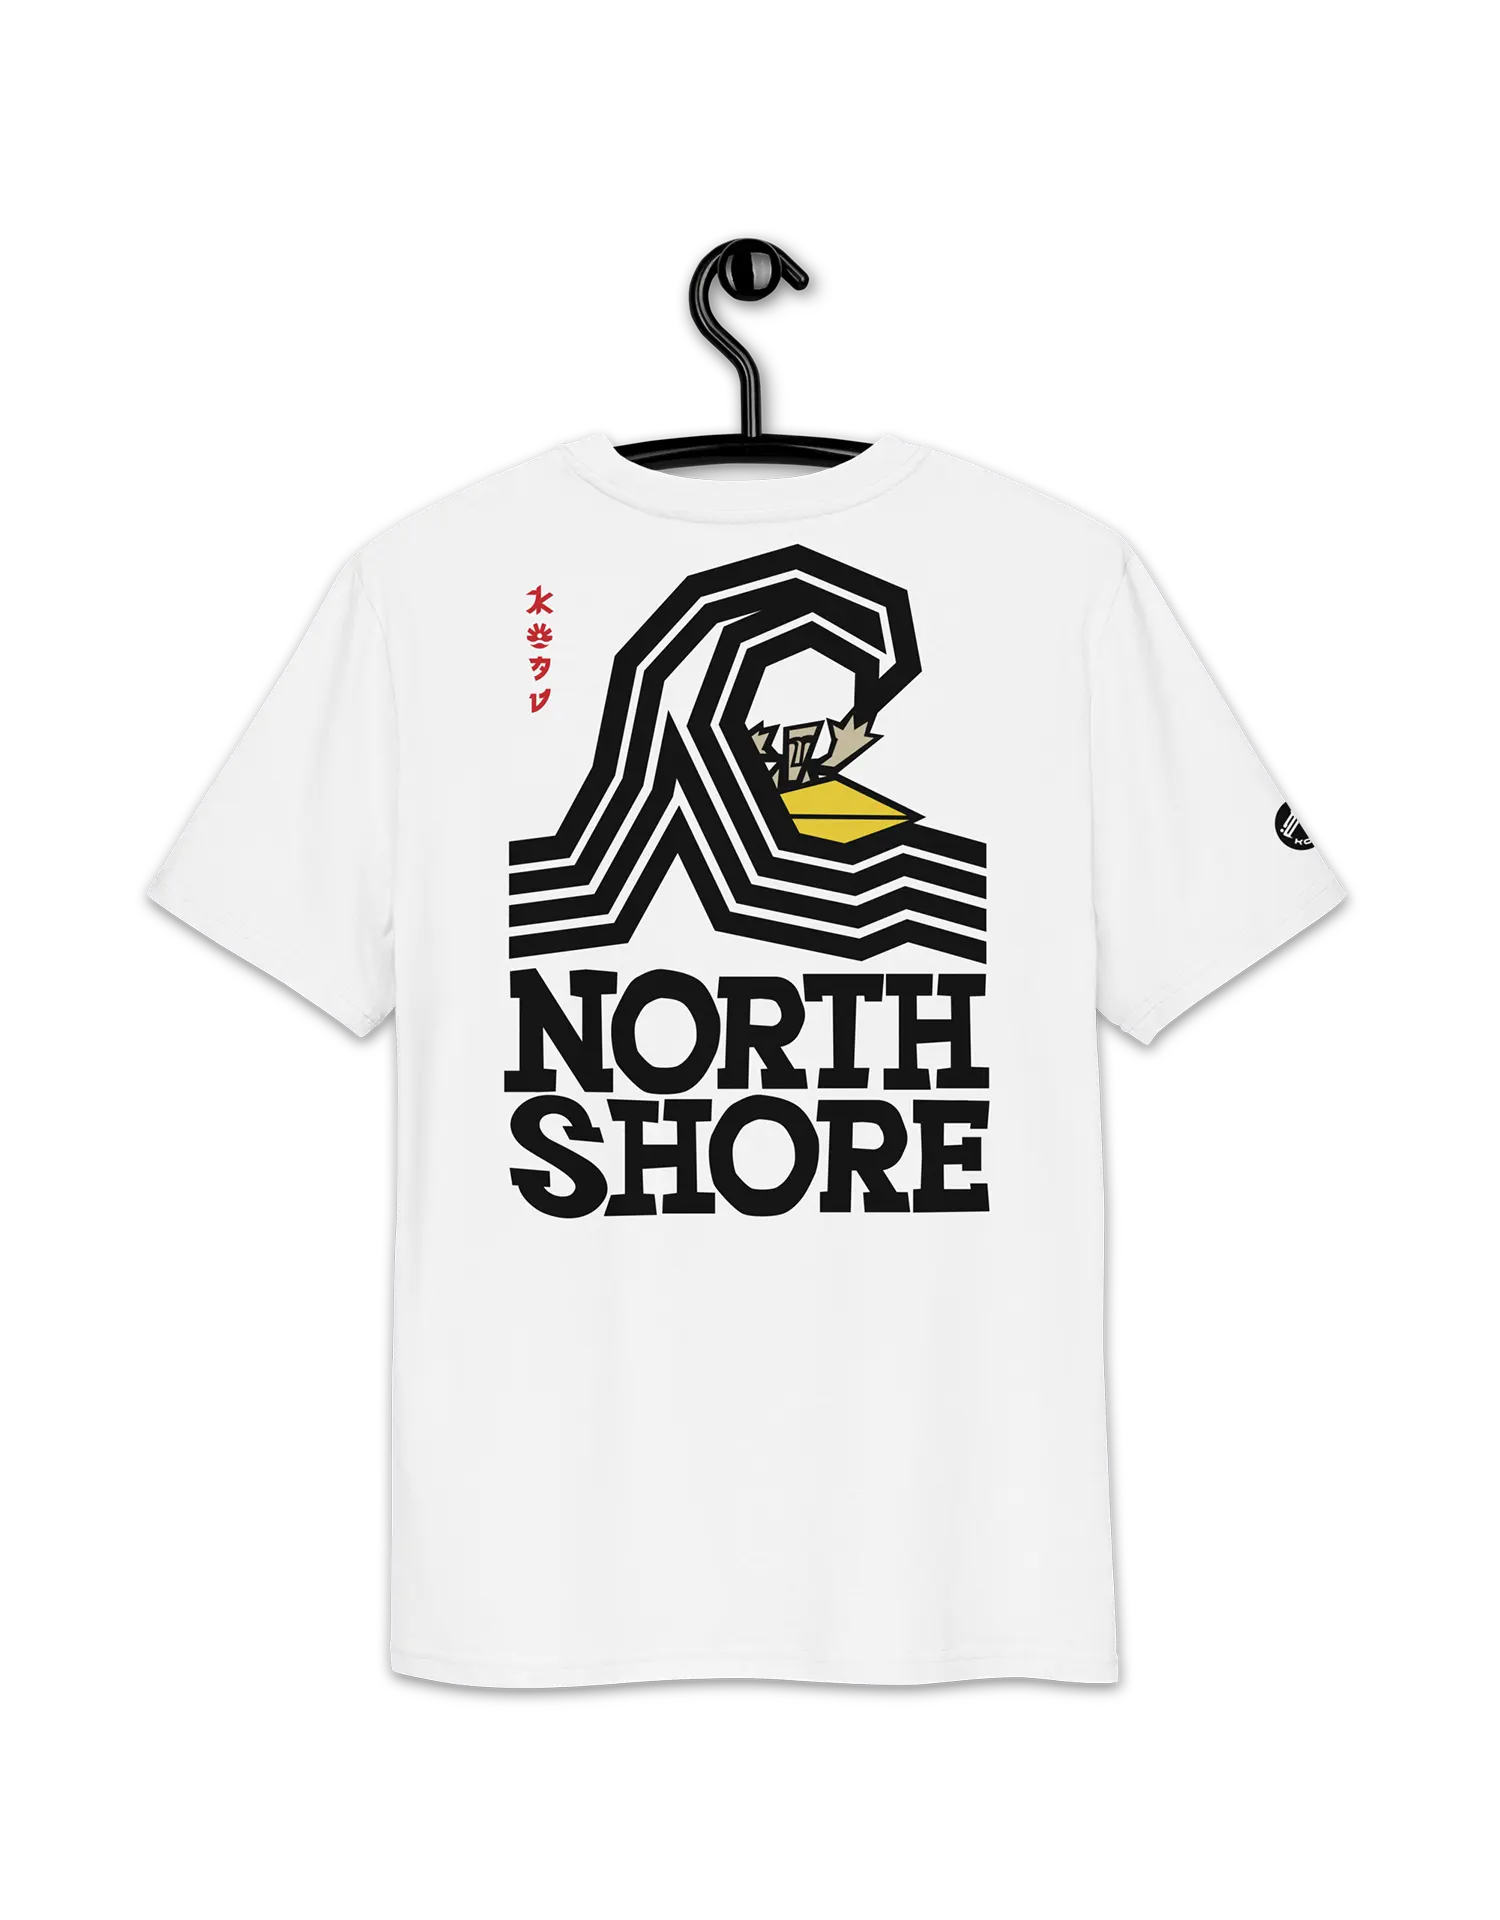 North Shore Surf White Premium Organic Cotton Eco-friendly T-Shirt by KOAV